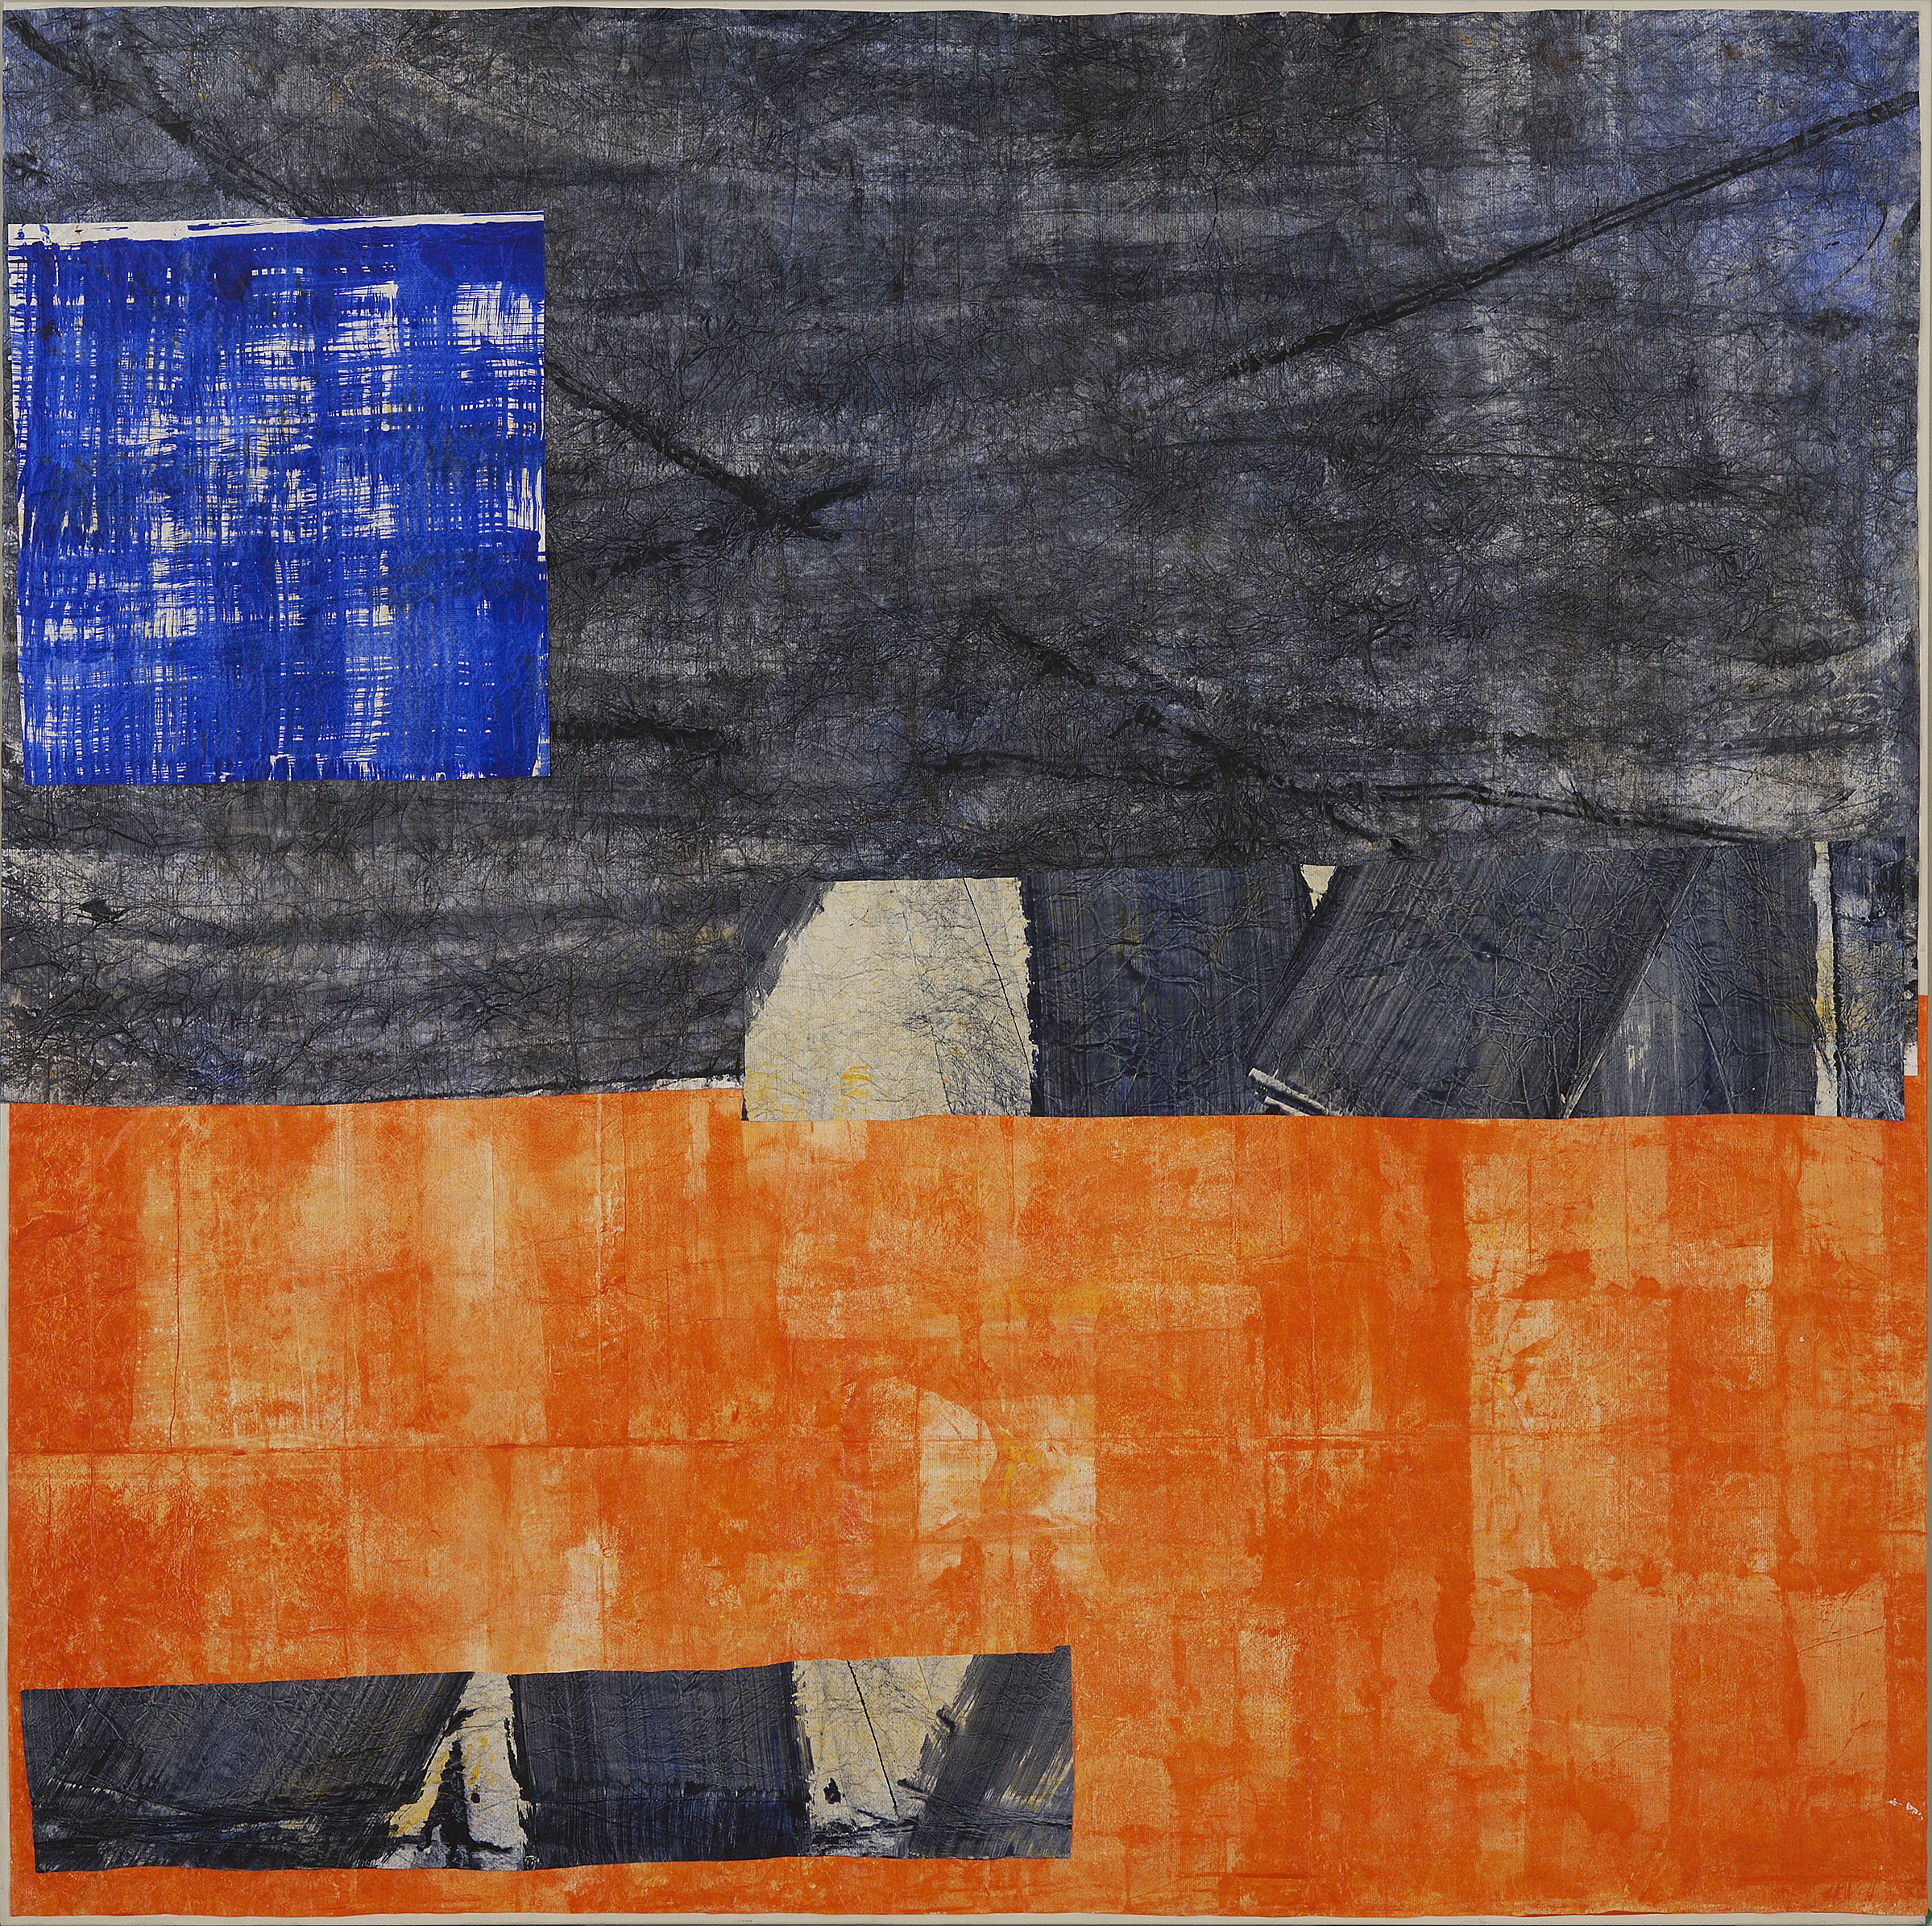                                       Adam Siegel, Day Break Series, 58” X 58”, mixed media on canvas, 2024                      